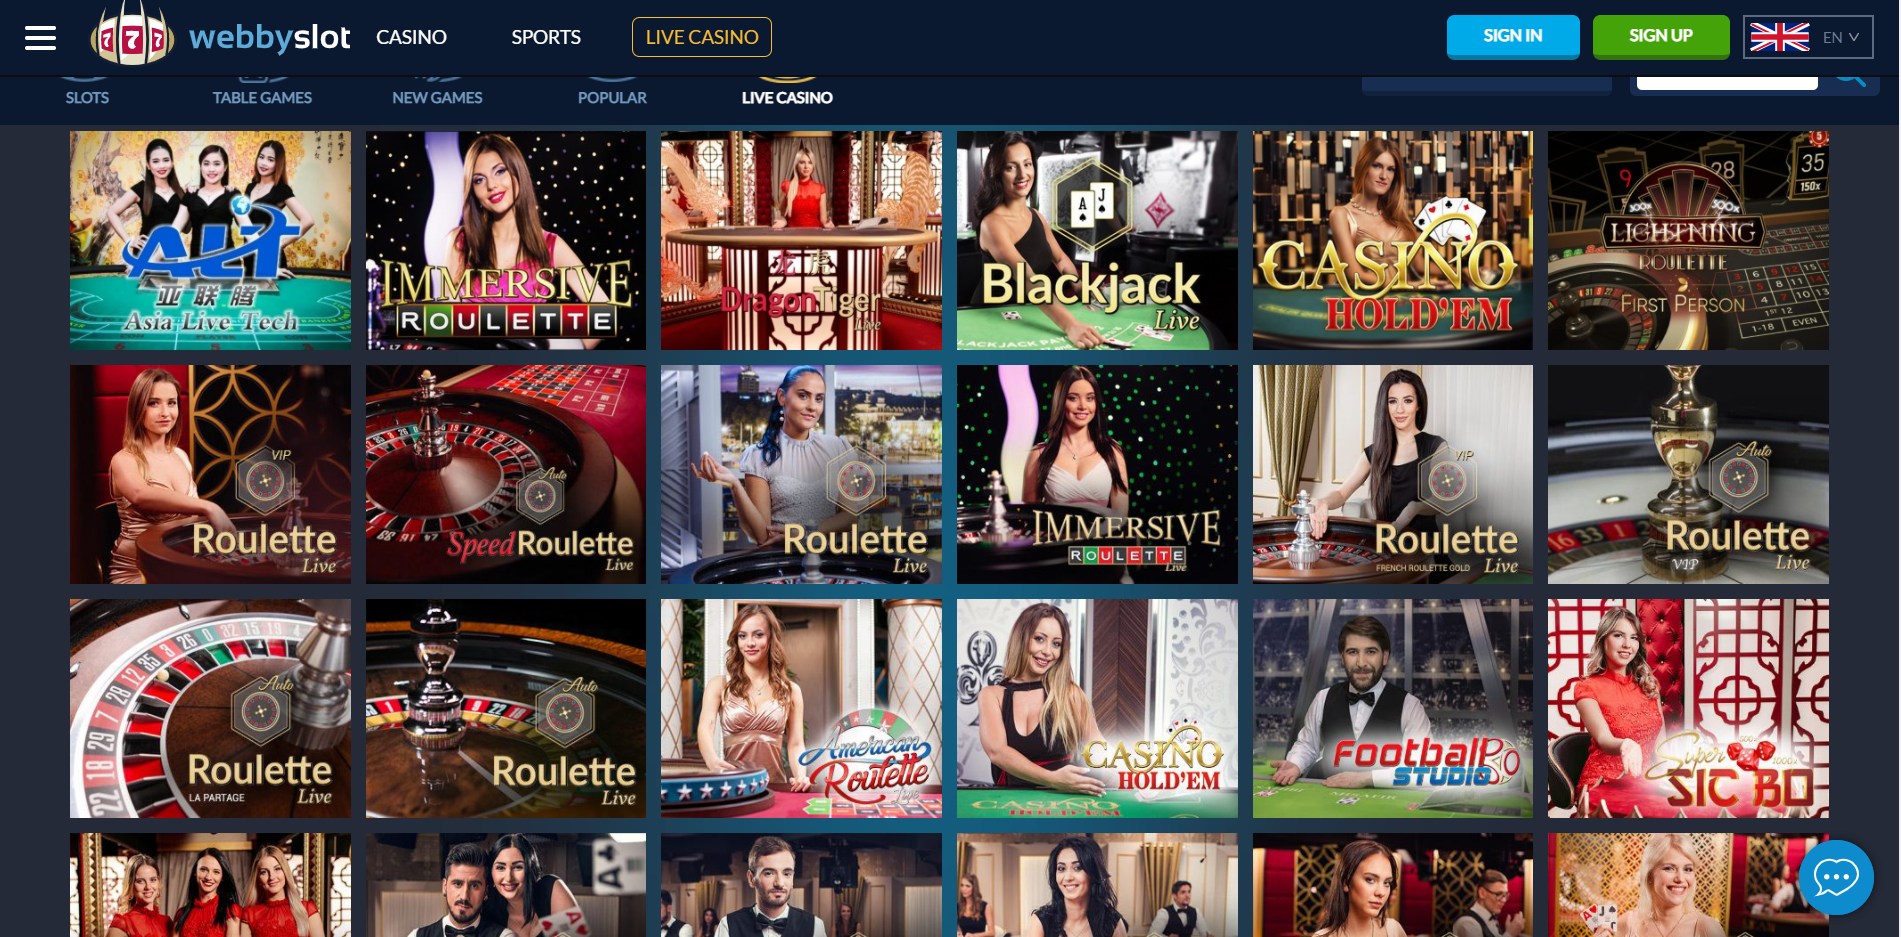 WebbySlot Casino Live Dealer Games